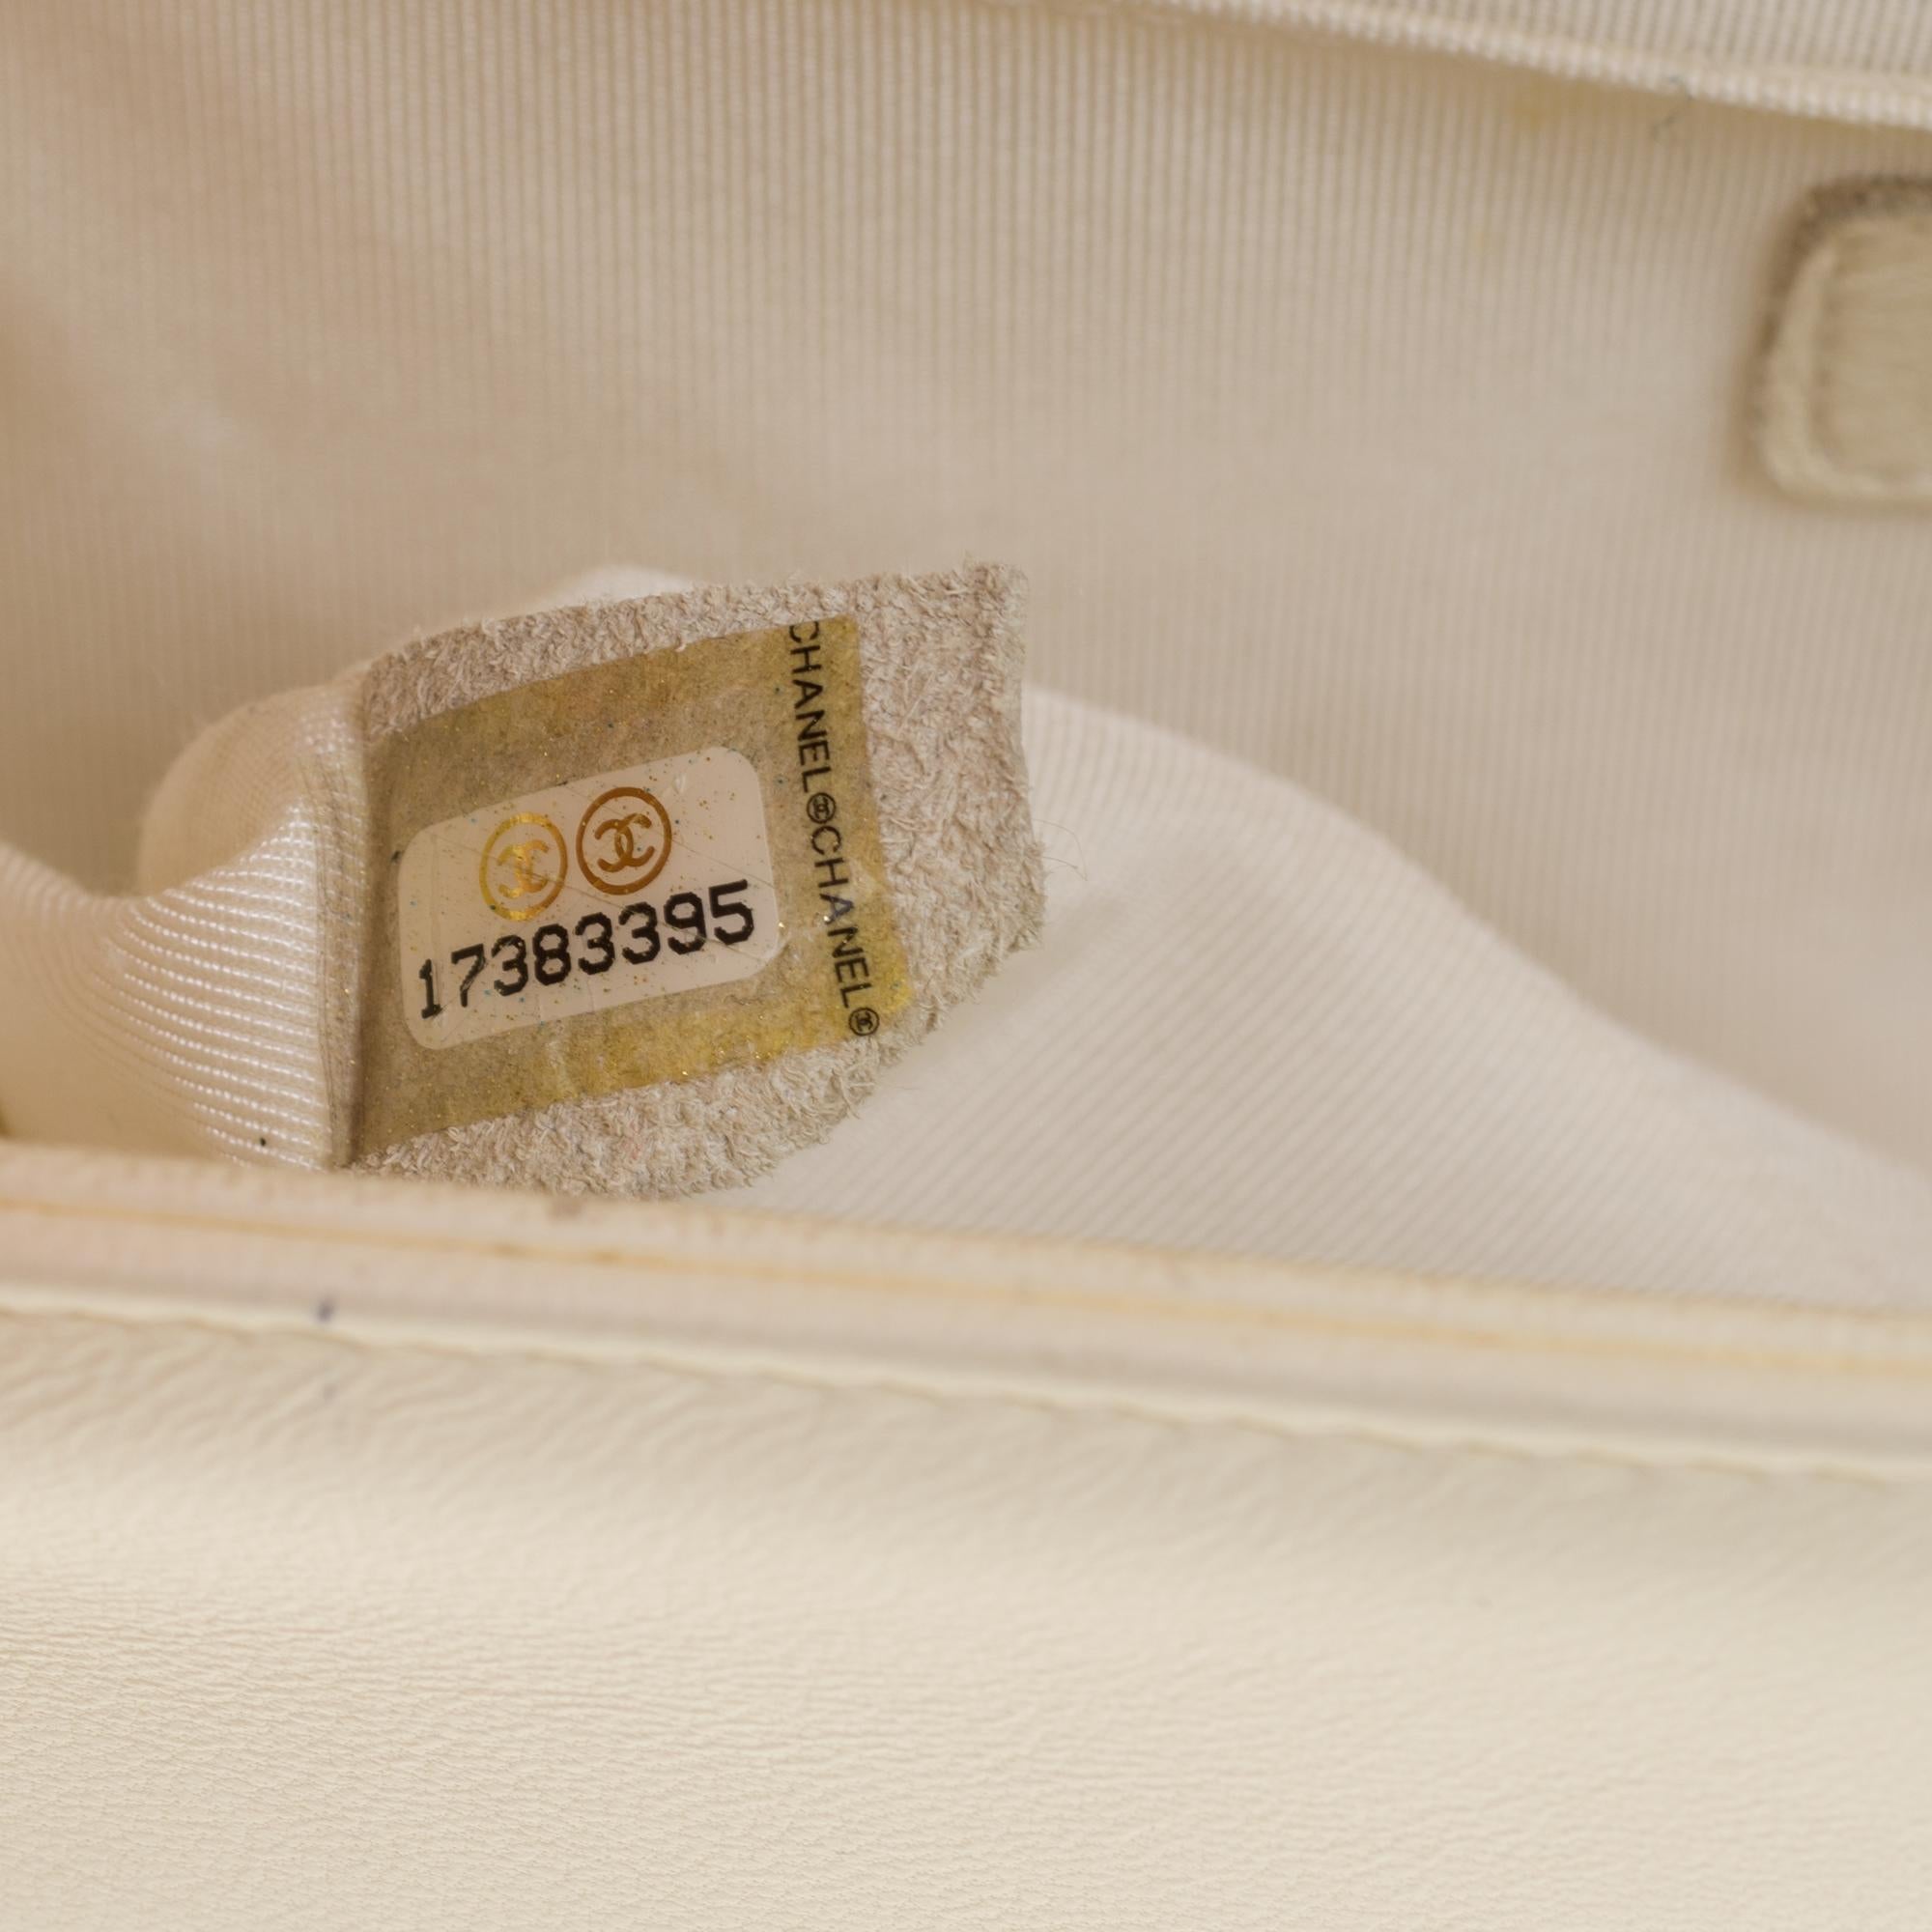 Women's Chanel Boy Paris/Edinburgh handbag in ivory embossed leather, GHW !